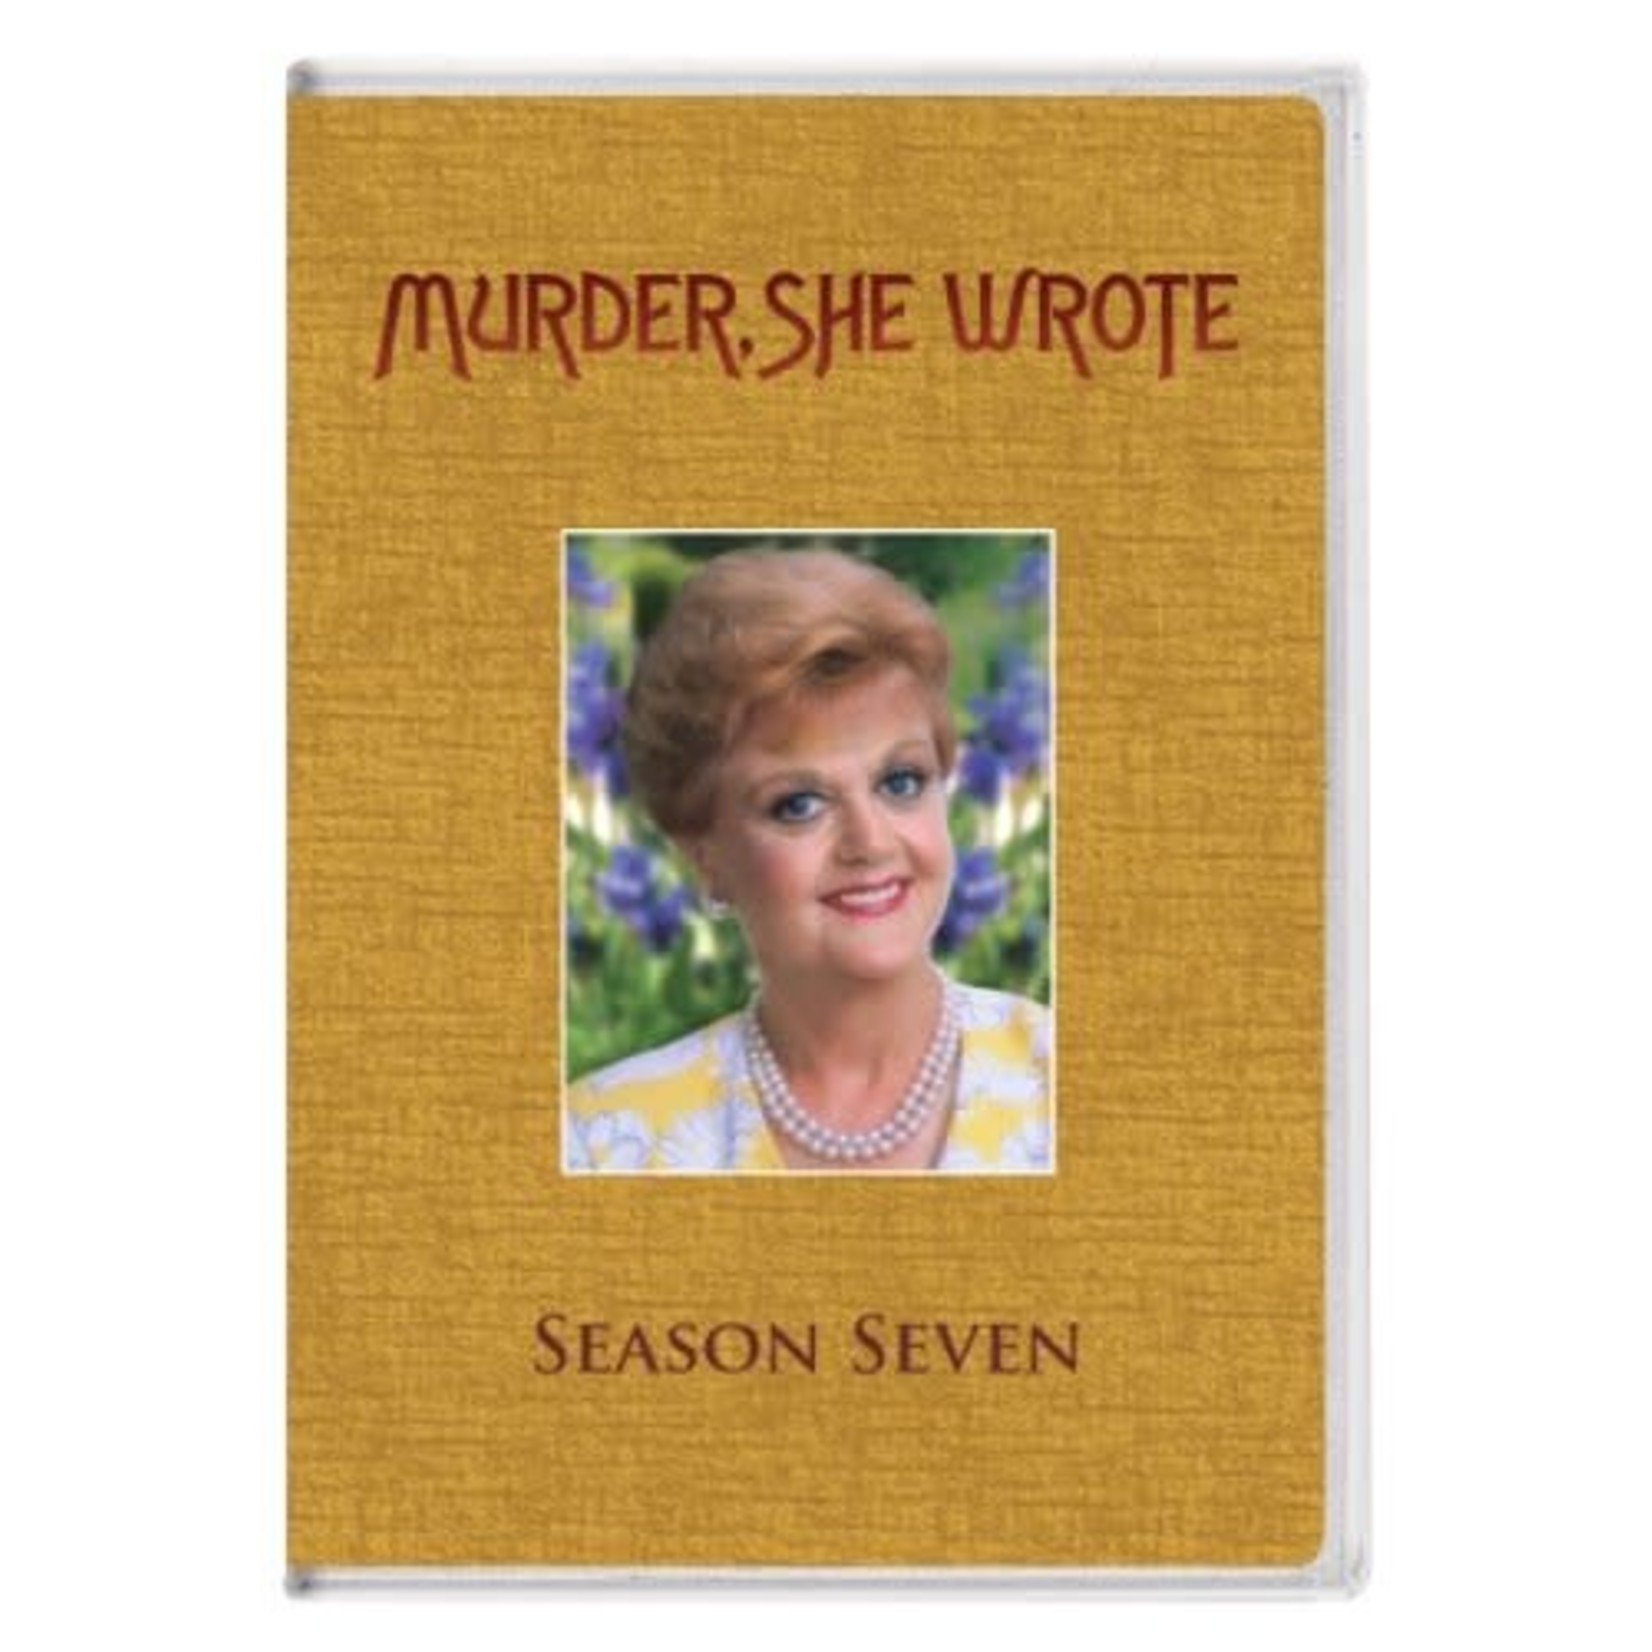 Murder, She Wrote - Season 7 [USED DVD]